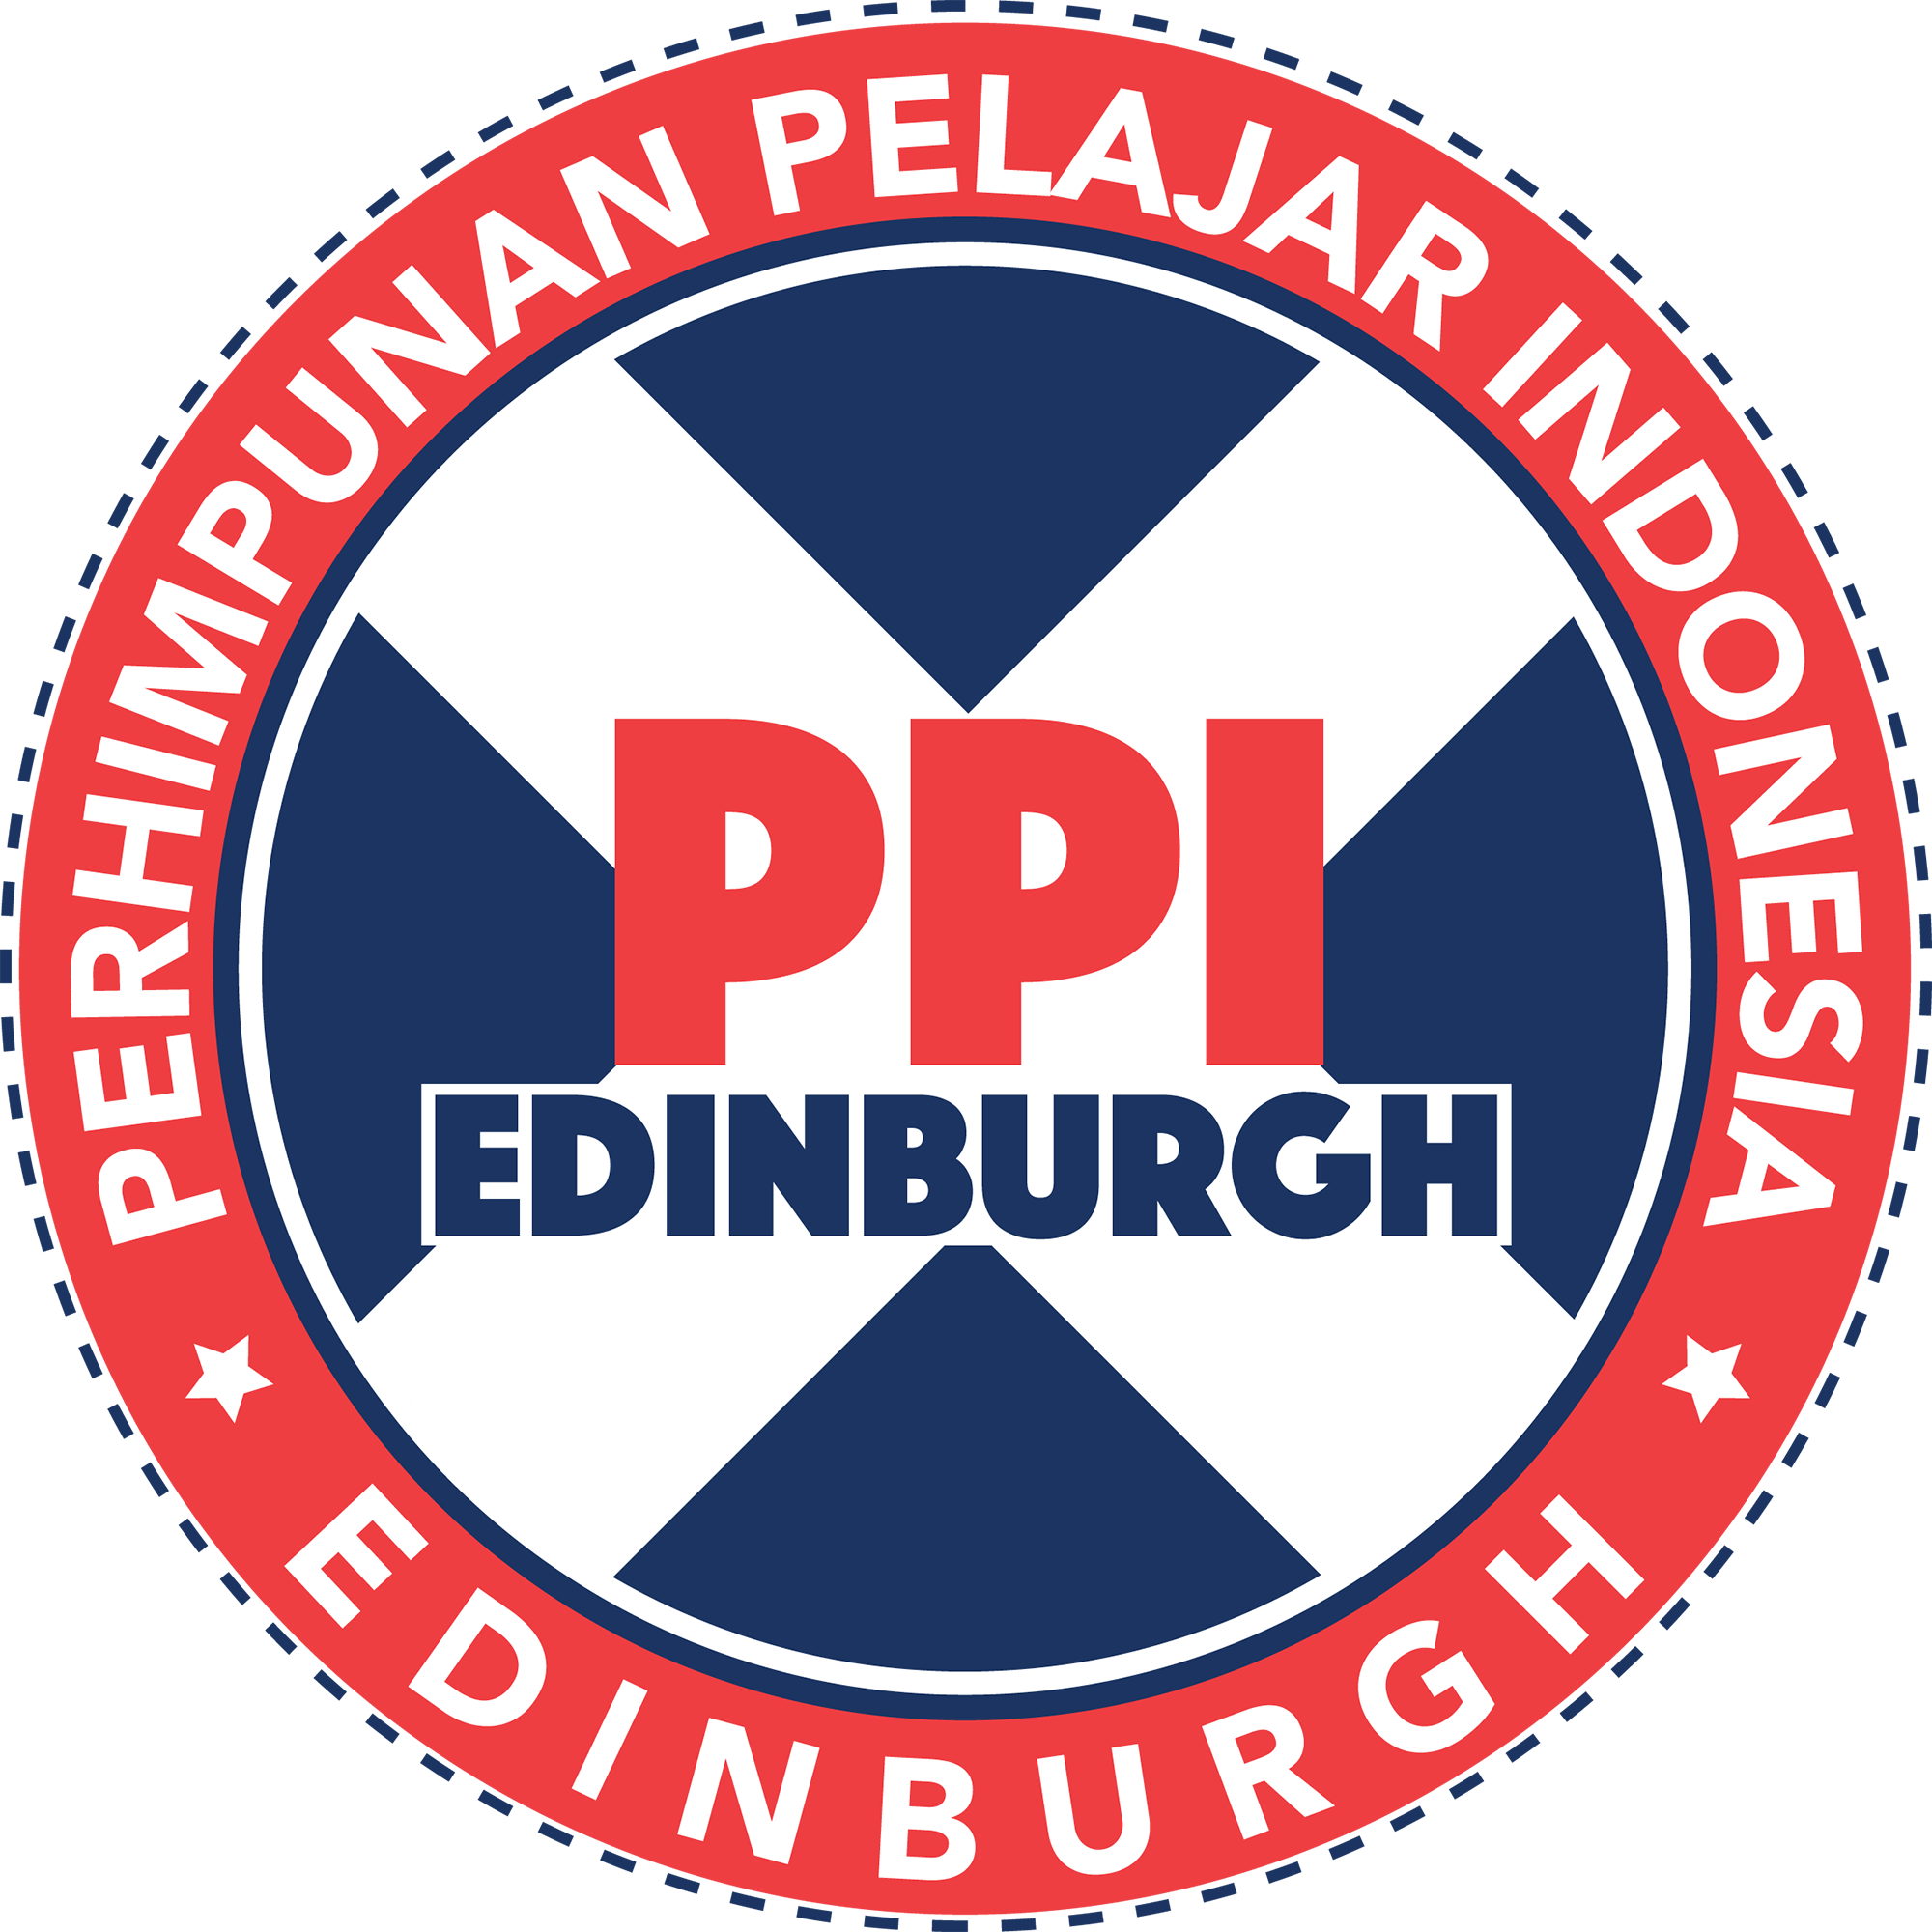 PPI Edinburgh